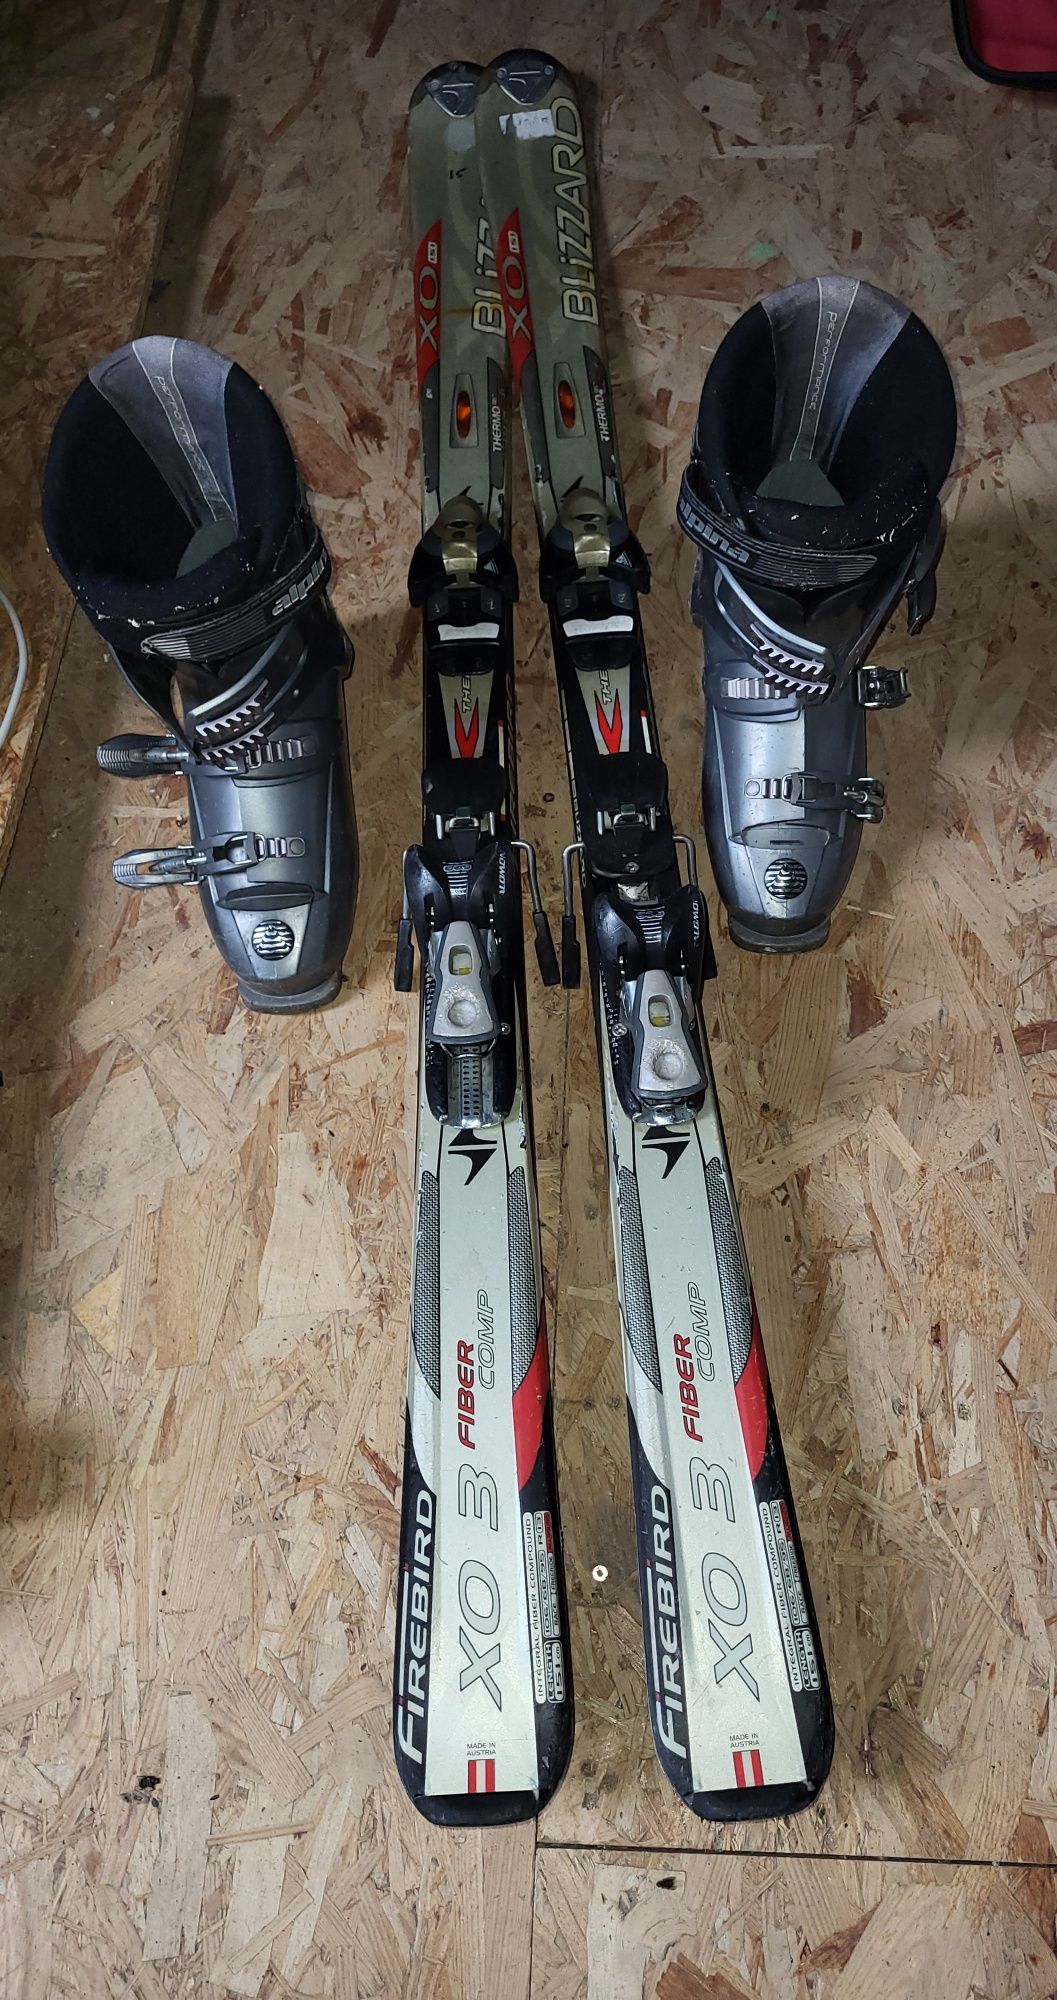 Komplet narciarski Narty i buty